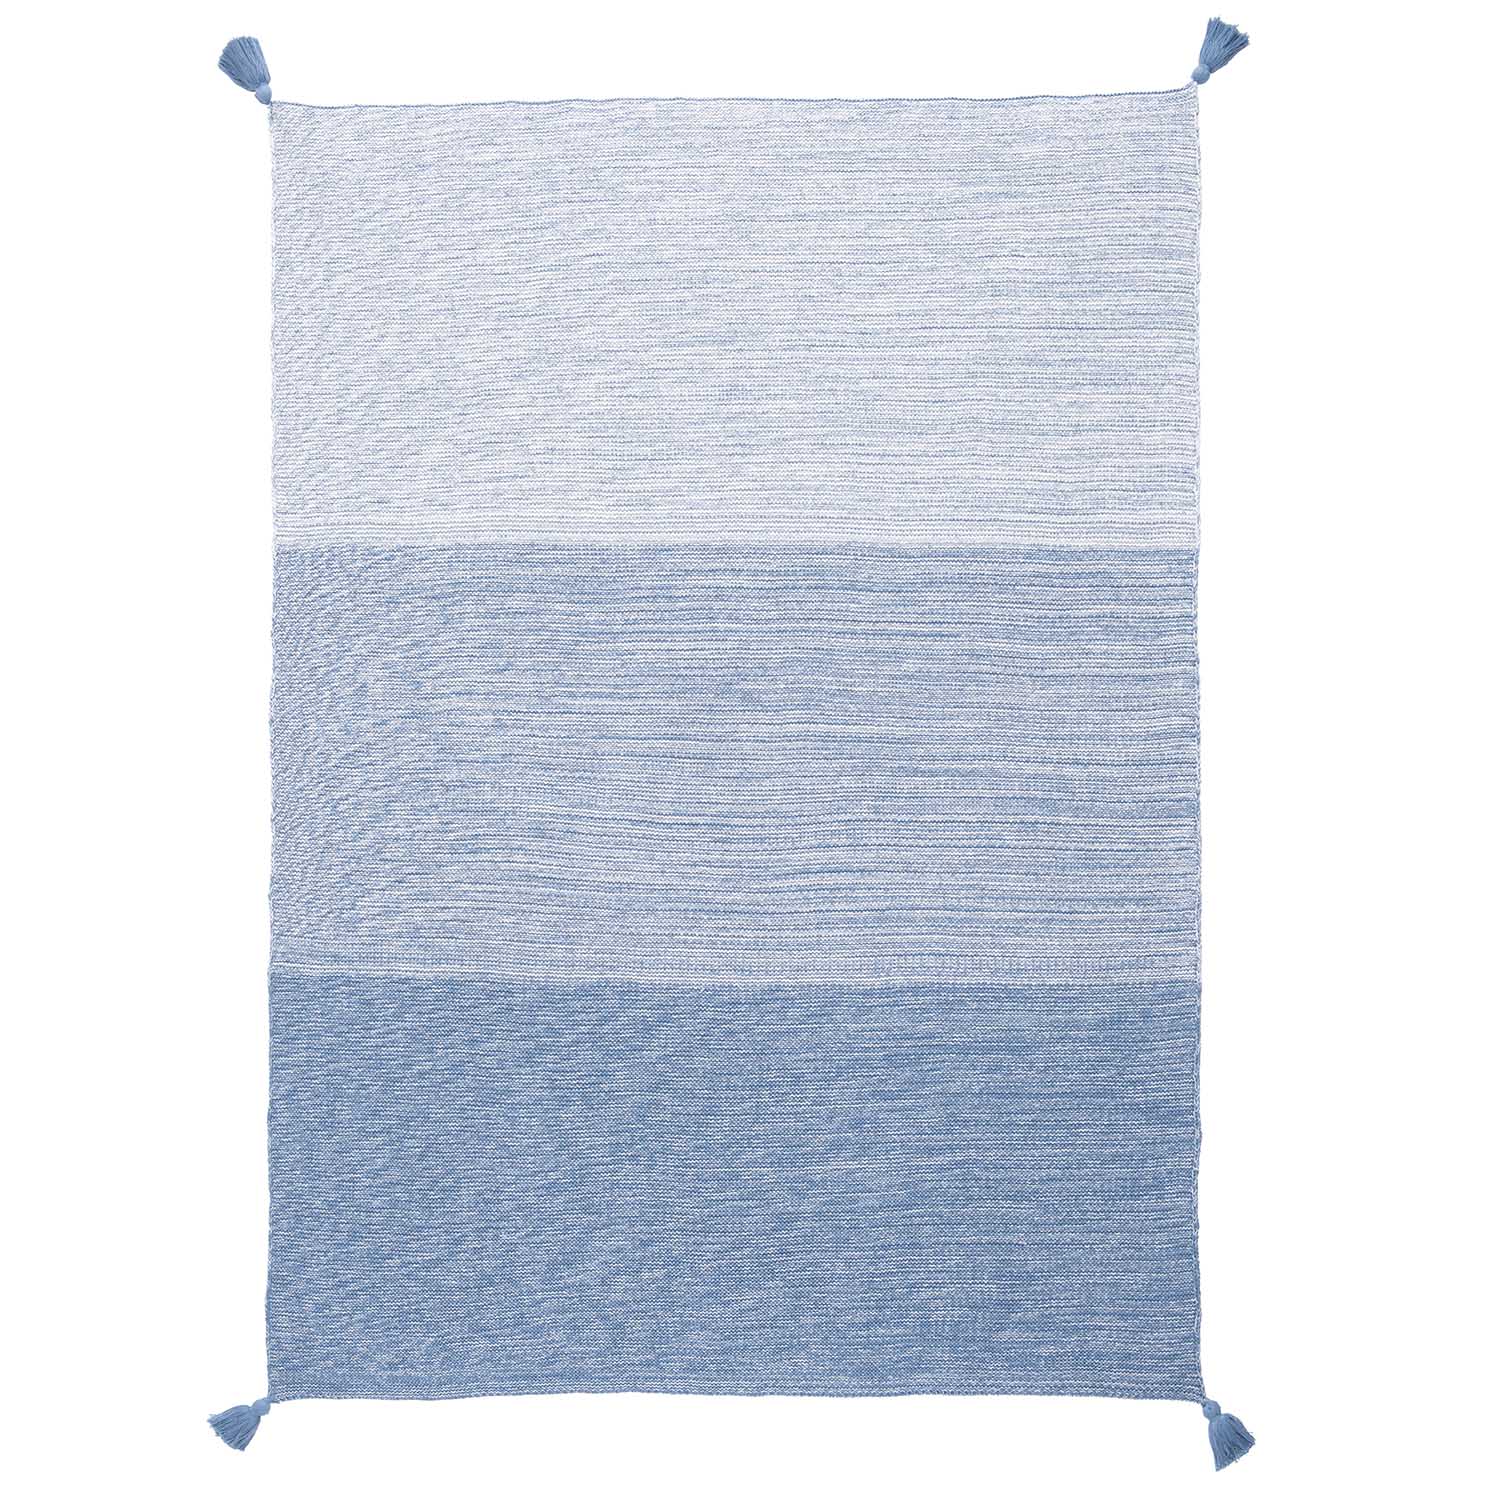 Blue Ombre Blanket